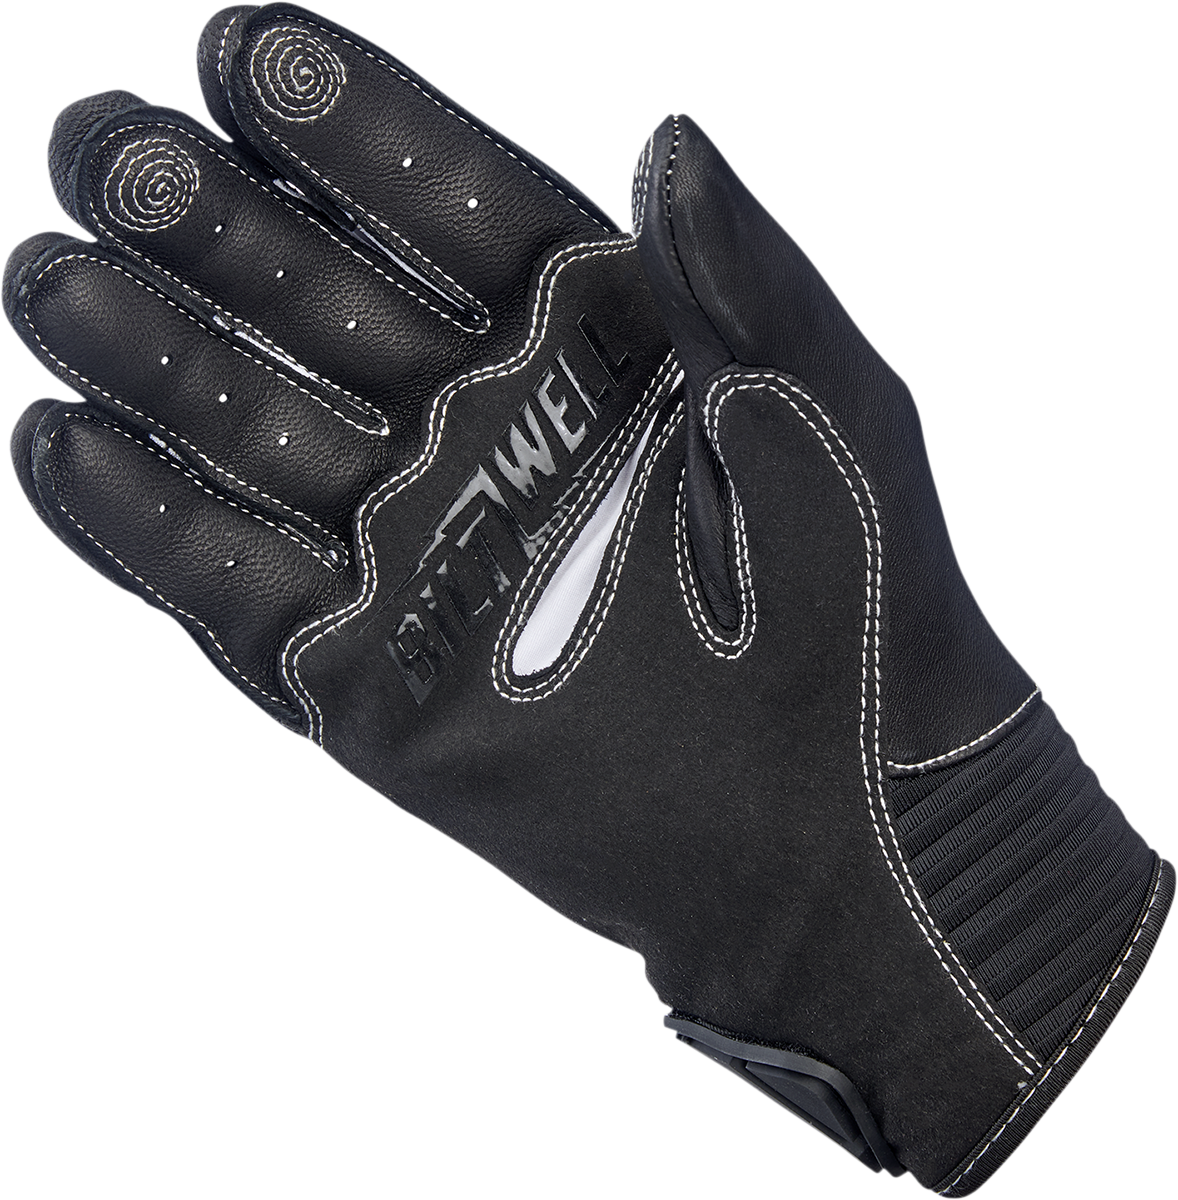 BILTWELL Bridgeport Gloves - Tan - Large 1509-0901-304